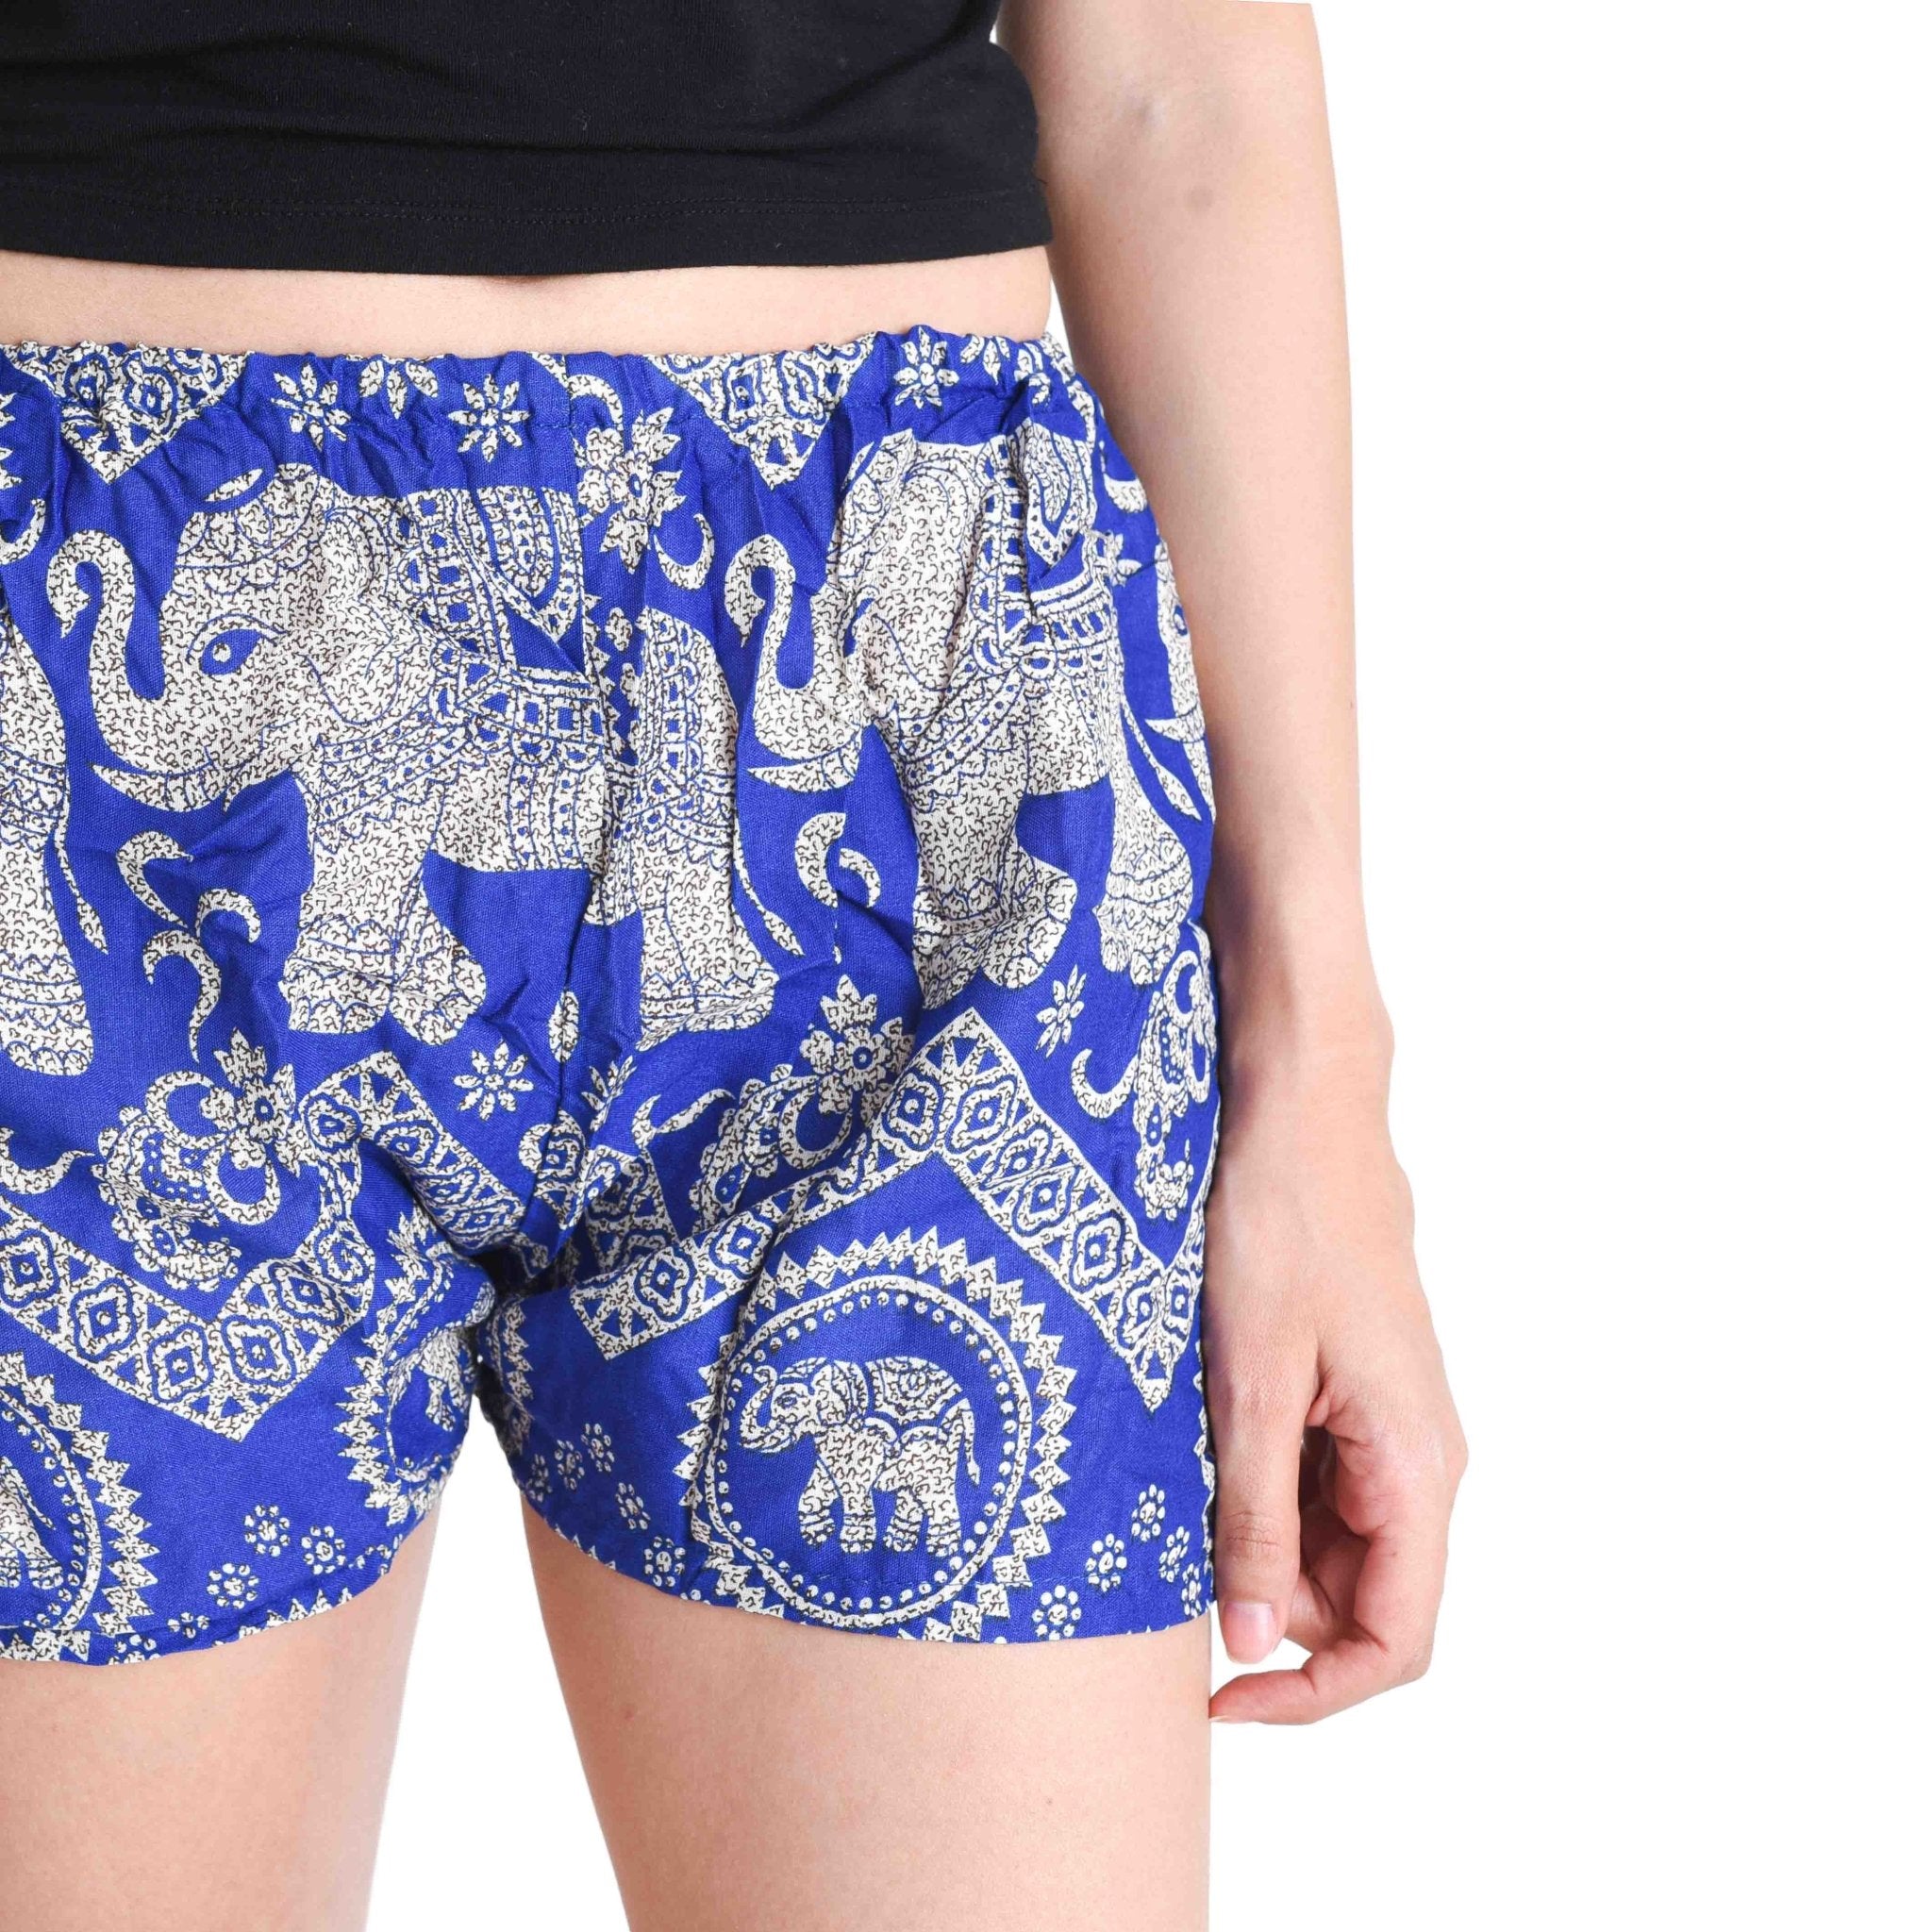 KRABI SHORTS Elepanta Women's Shorts - Buy Today Elephant Pants Jewelry And Bohemian Clothes Handmade In Thailand Help To Save The Elephants FairTrade And Vegan